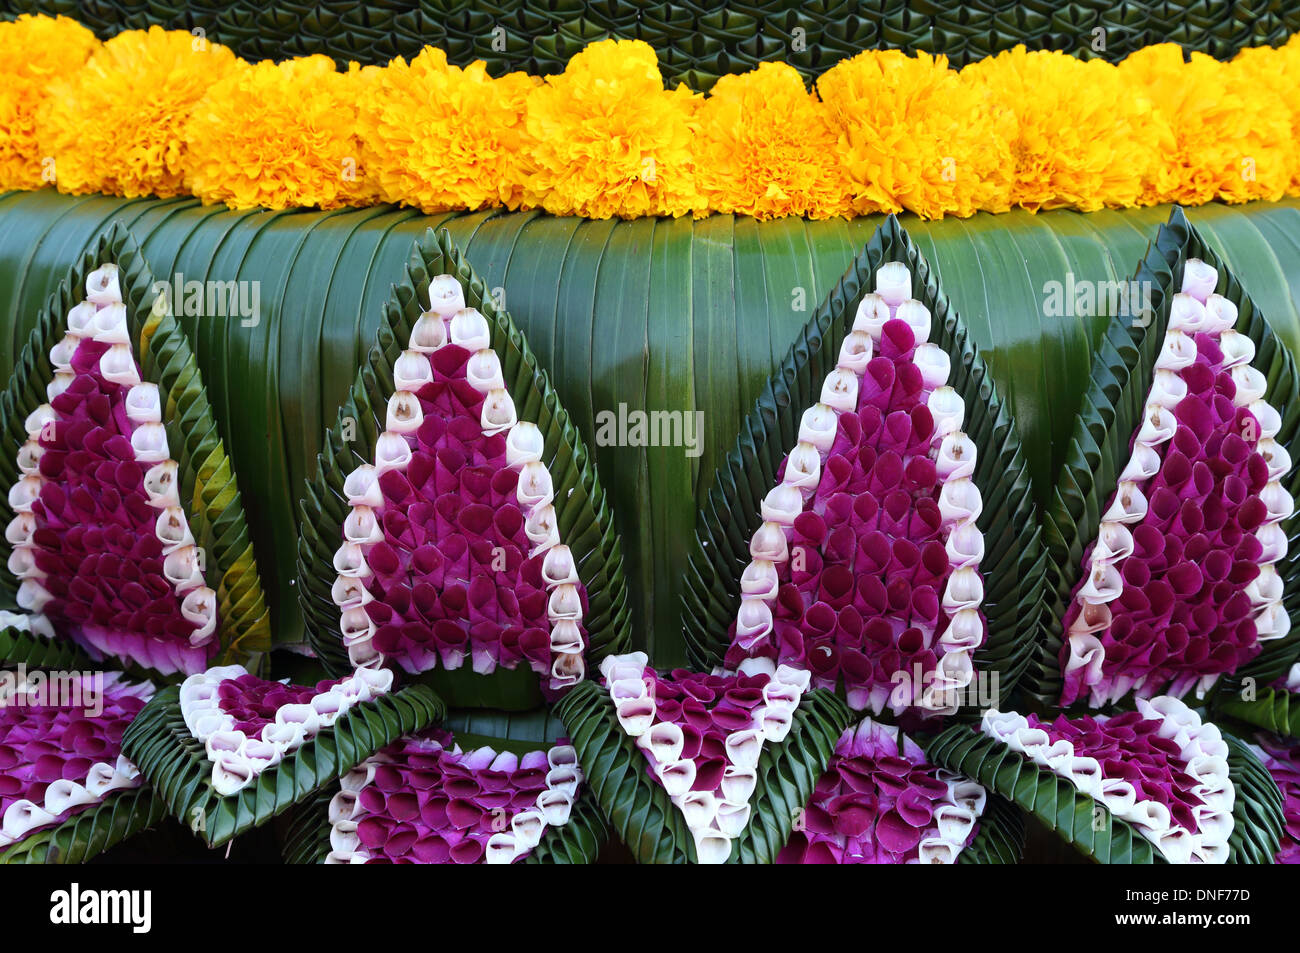 Closeup Onam Pookalam Typical Flower Decoration Stock Photo 708582817 |  Shutterstock